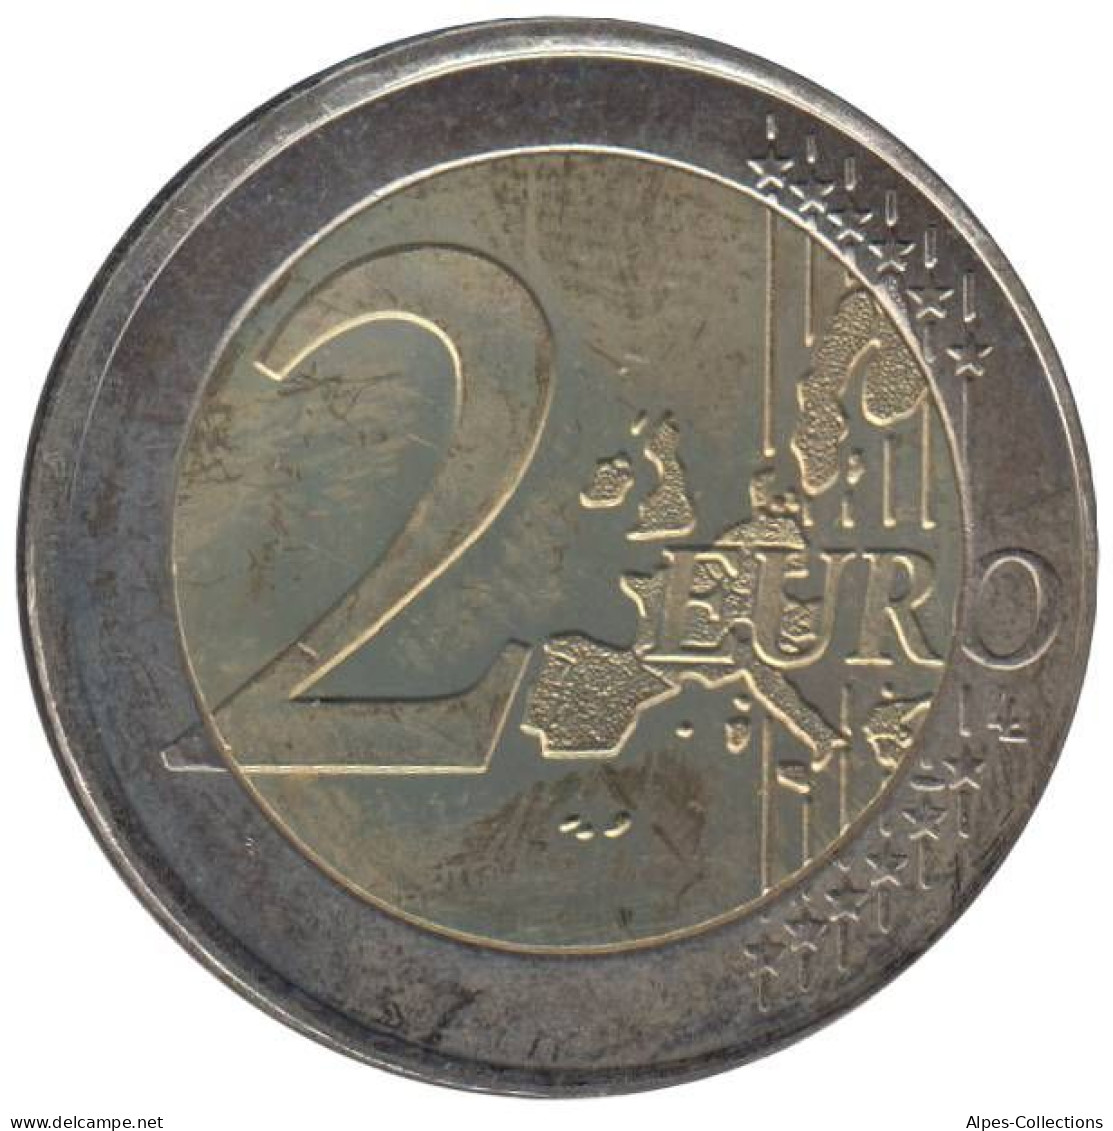 GR20002.2 - GRECE - 2 Euros - 2002 S - Atelier Finlande - Grèce